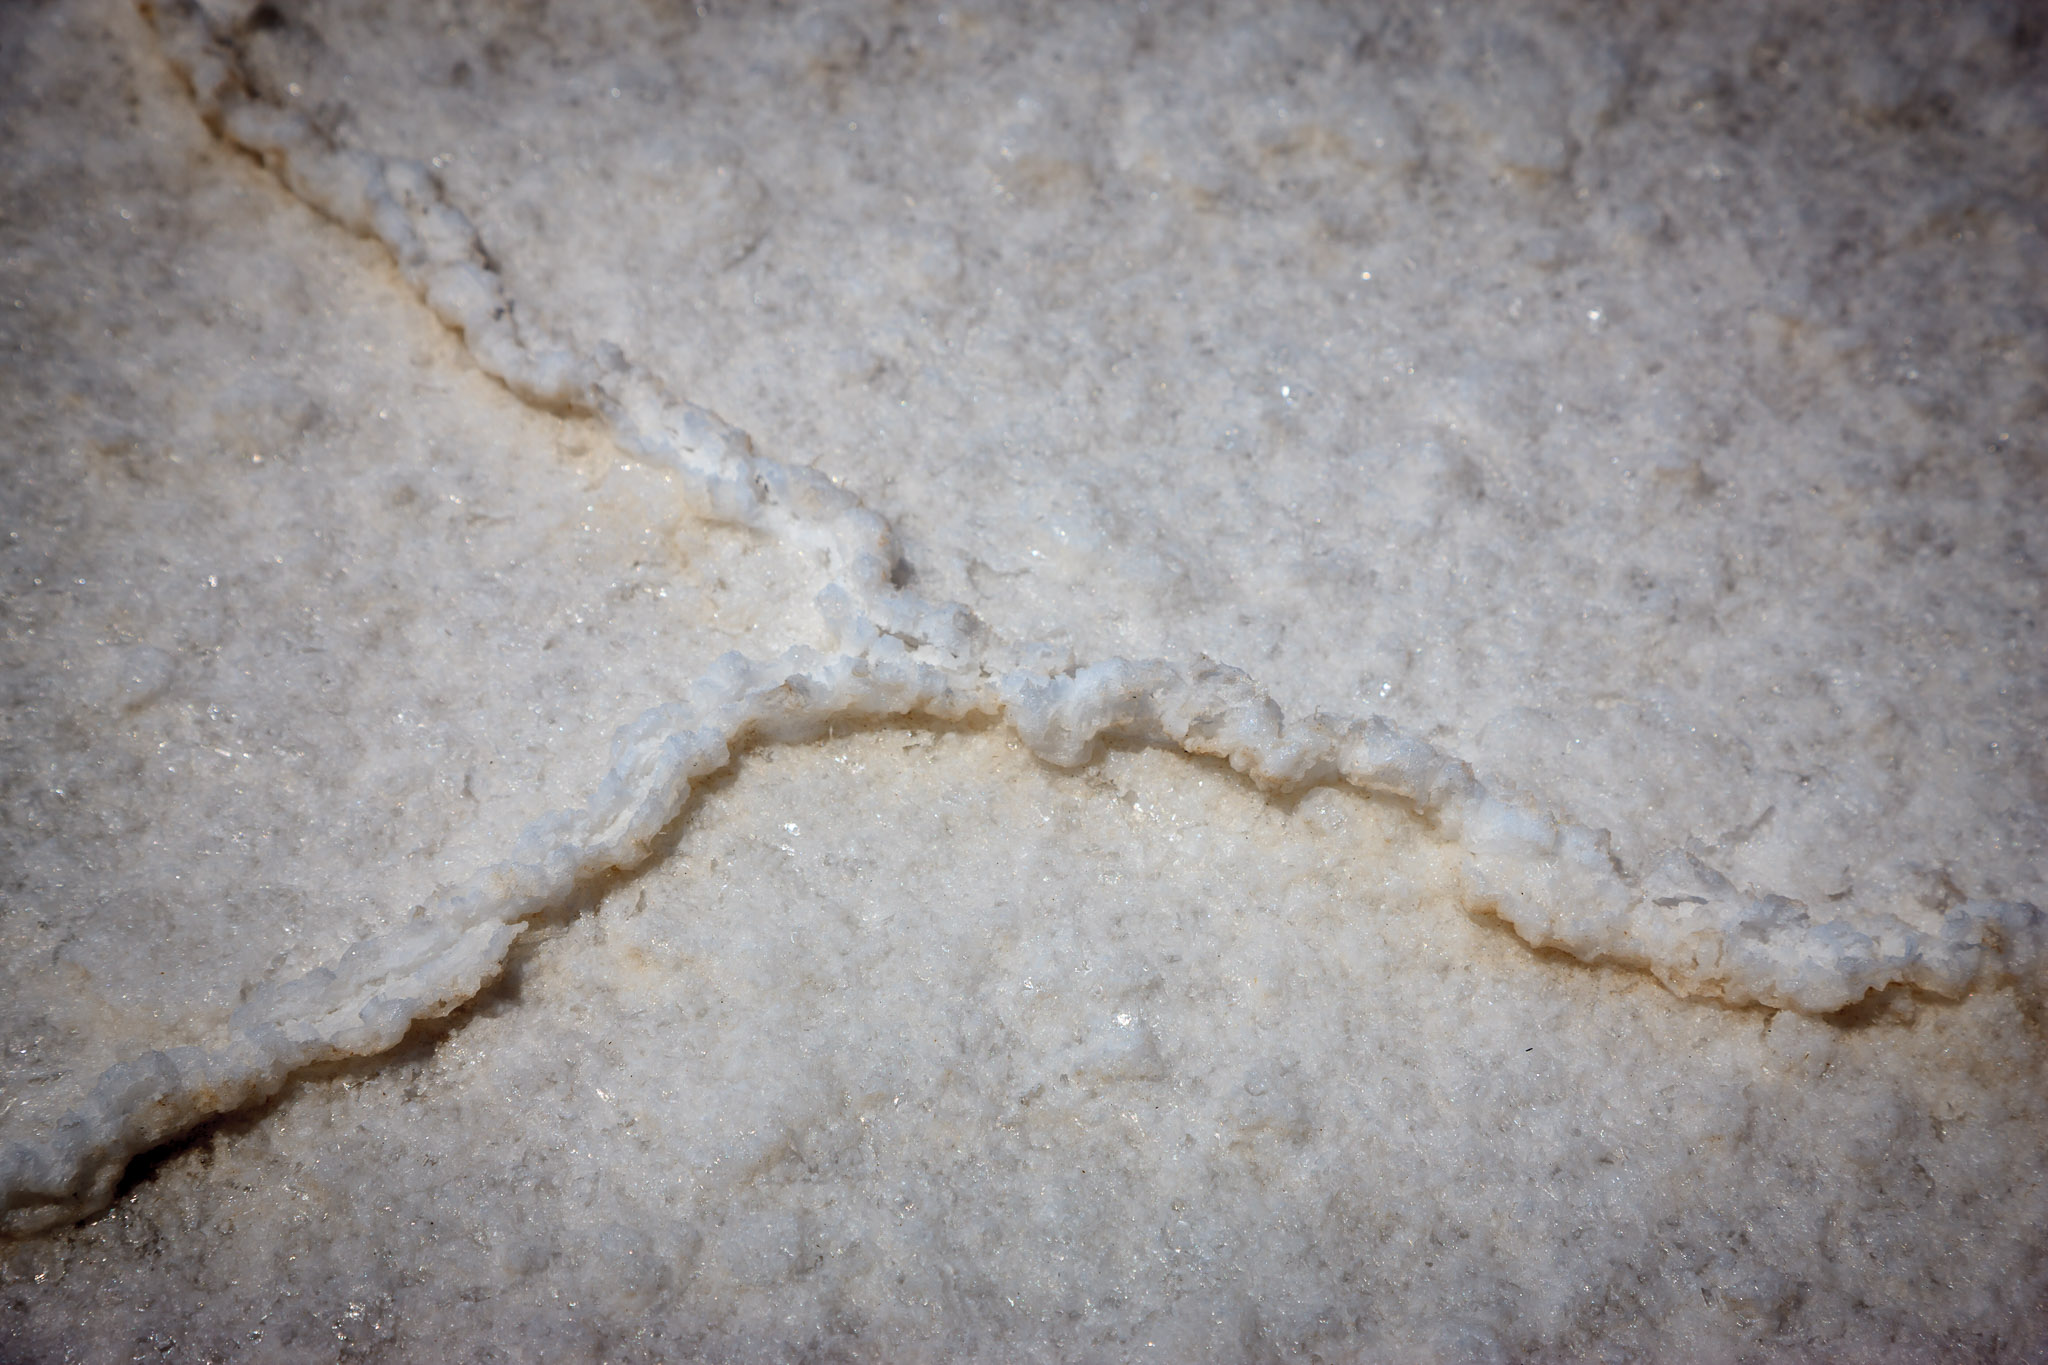 Small pressure ridges formed when salt dried